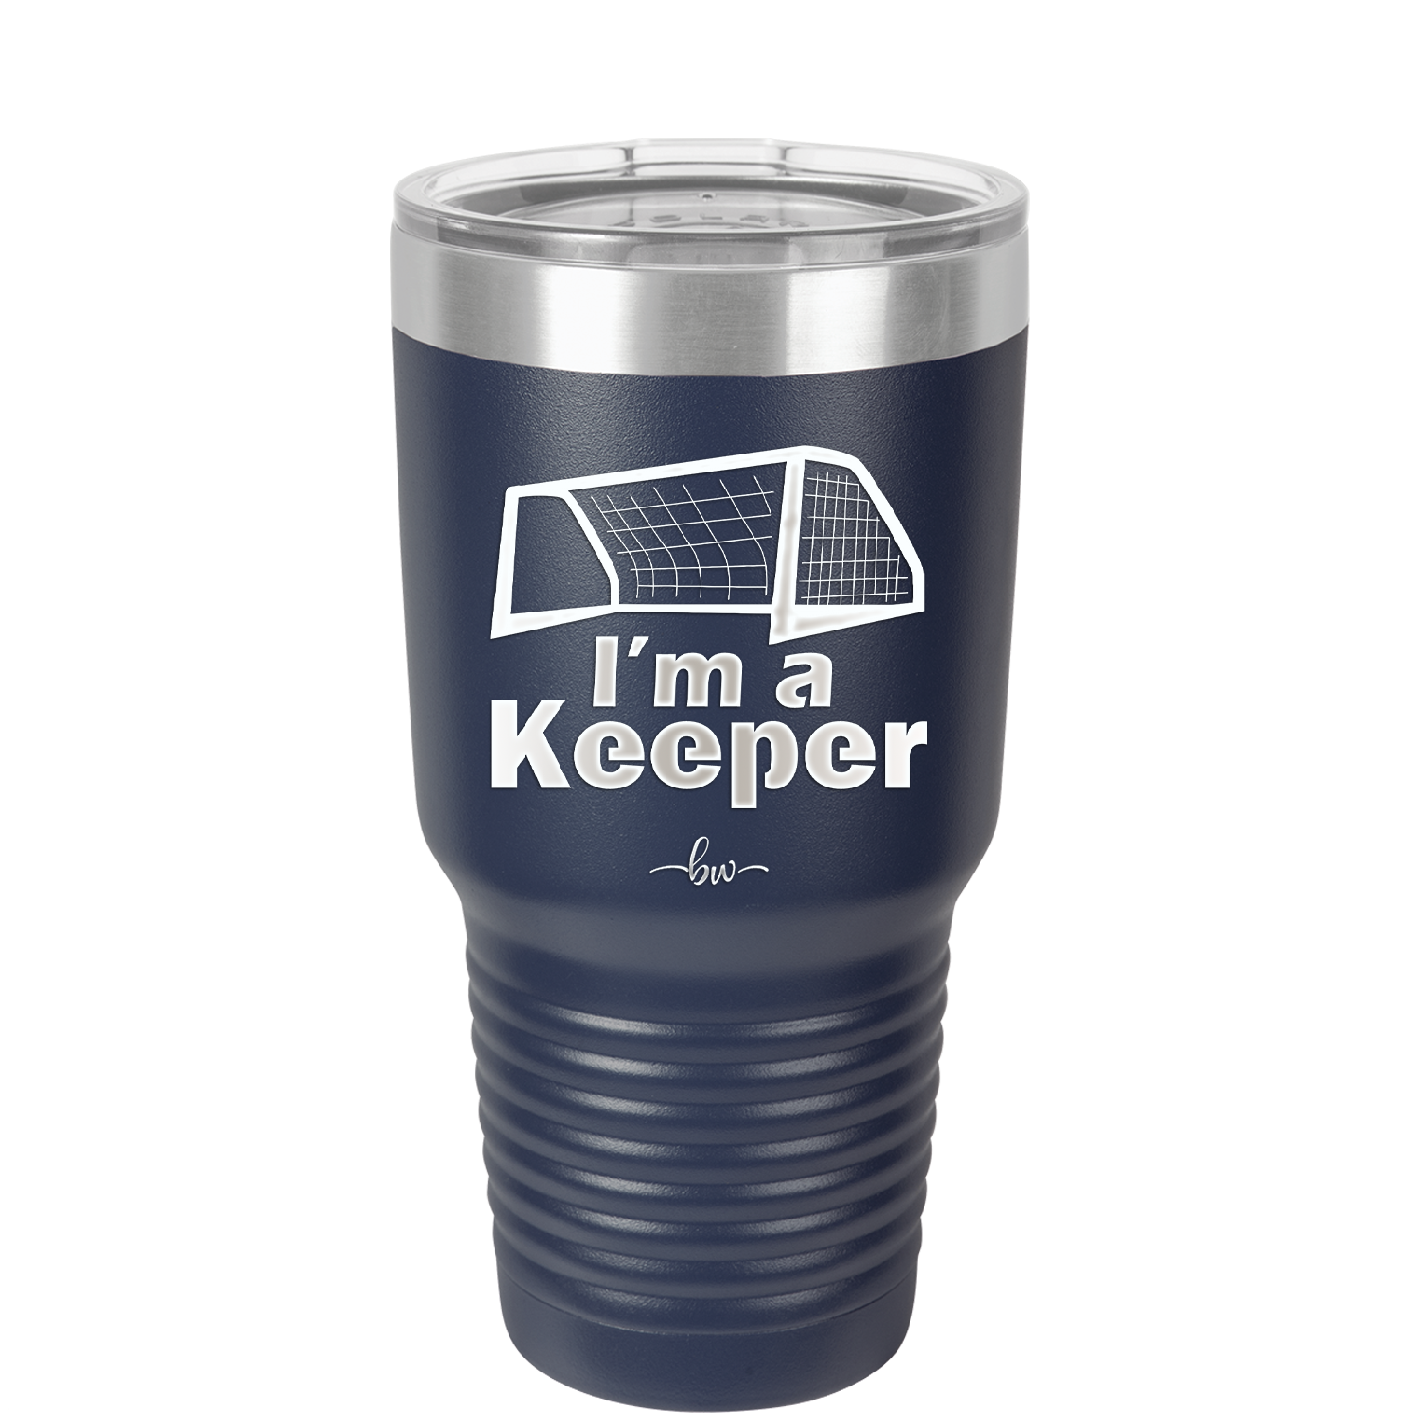 I'm a Keeper Goalie - Laser Engraved Stainless Steel Drinkware - 1910 -